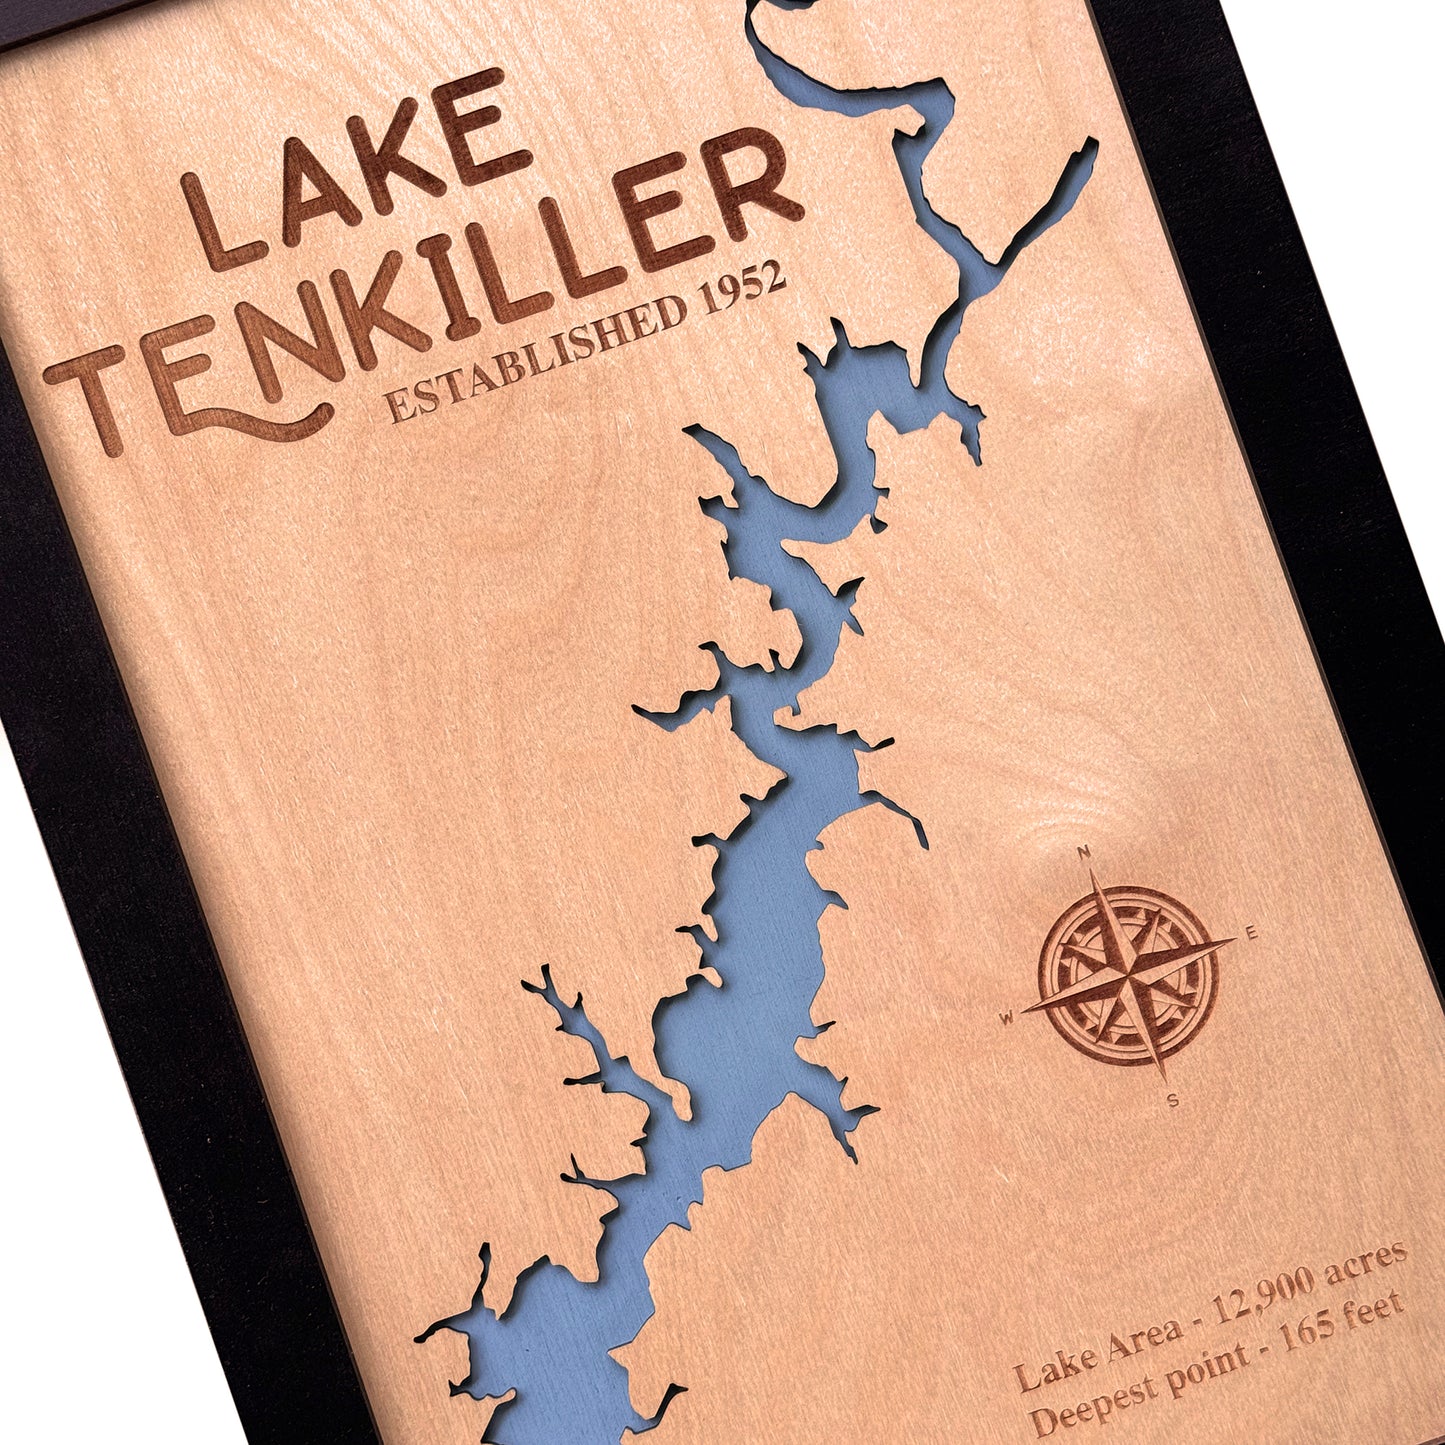 Lake Tenkiller Map